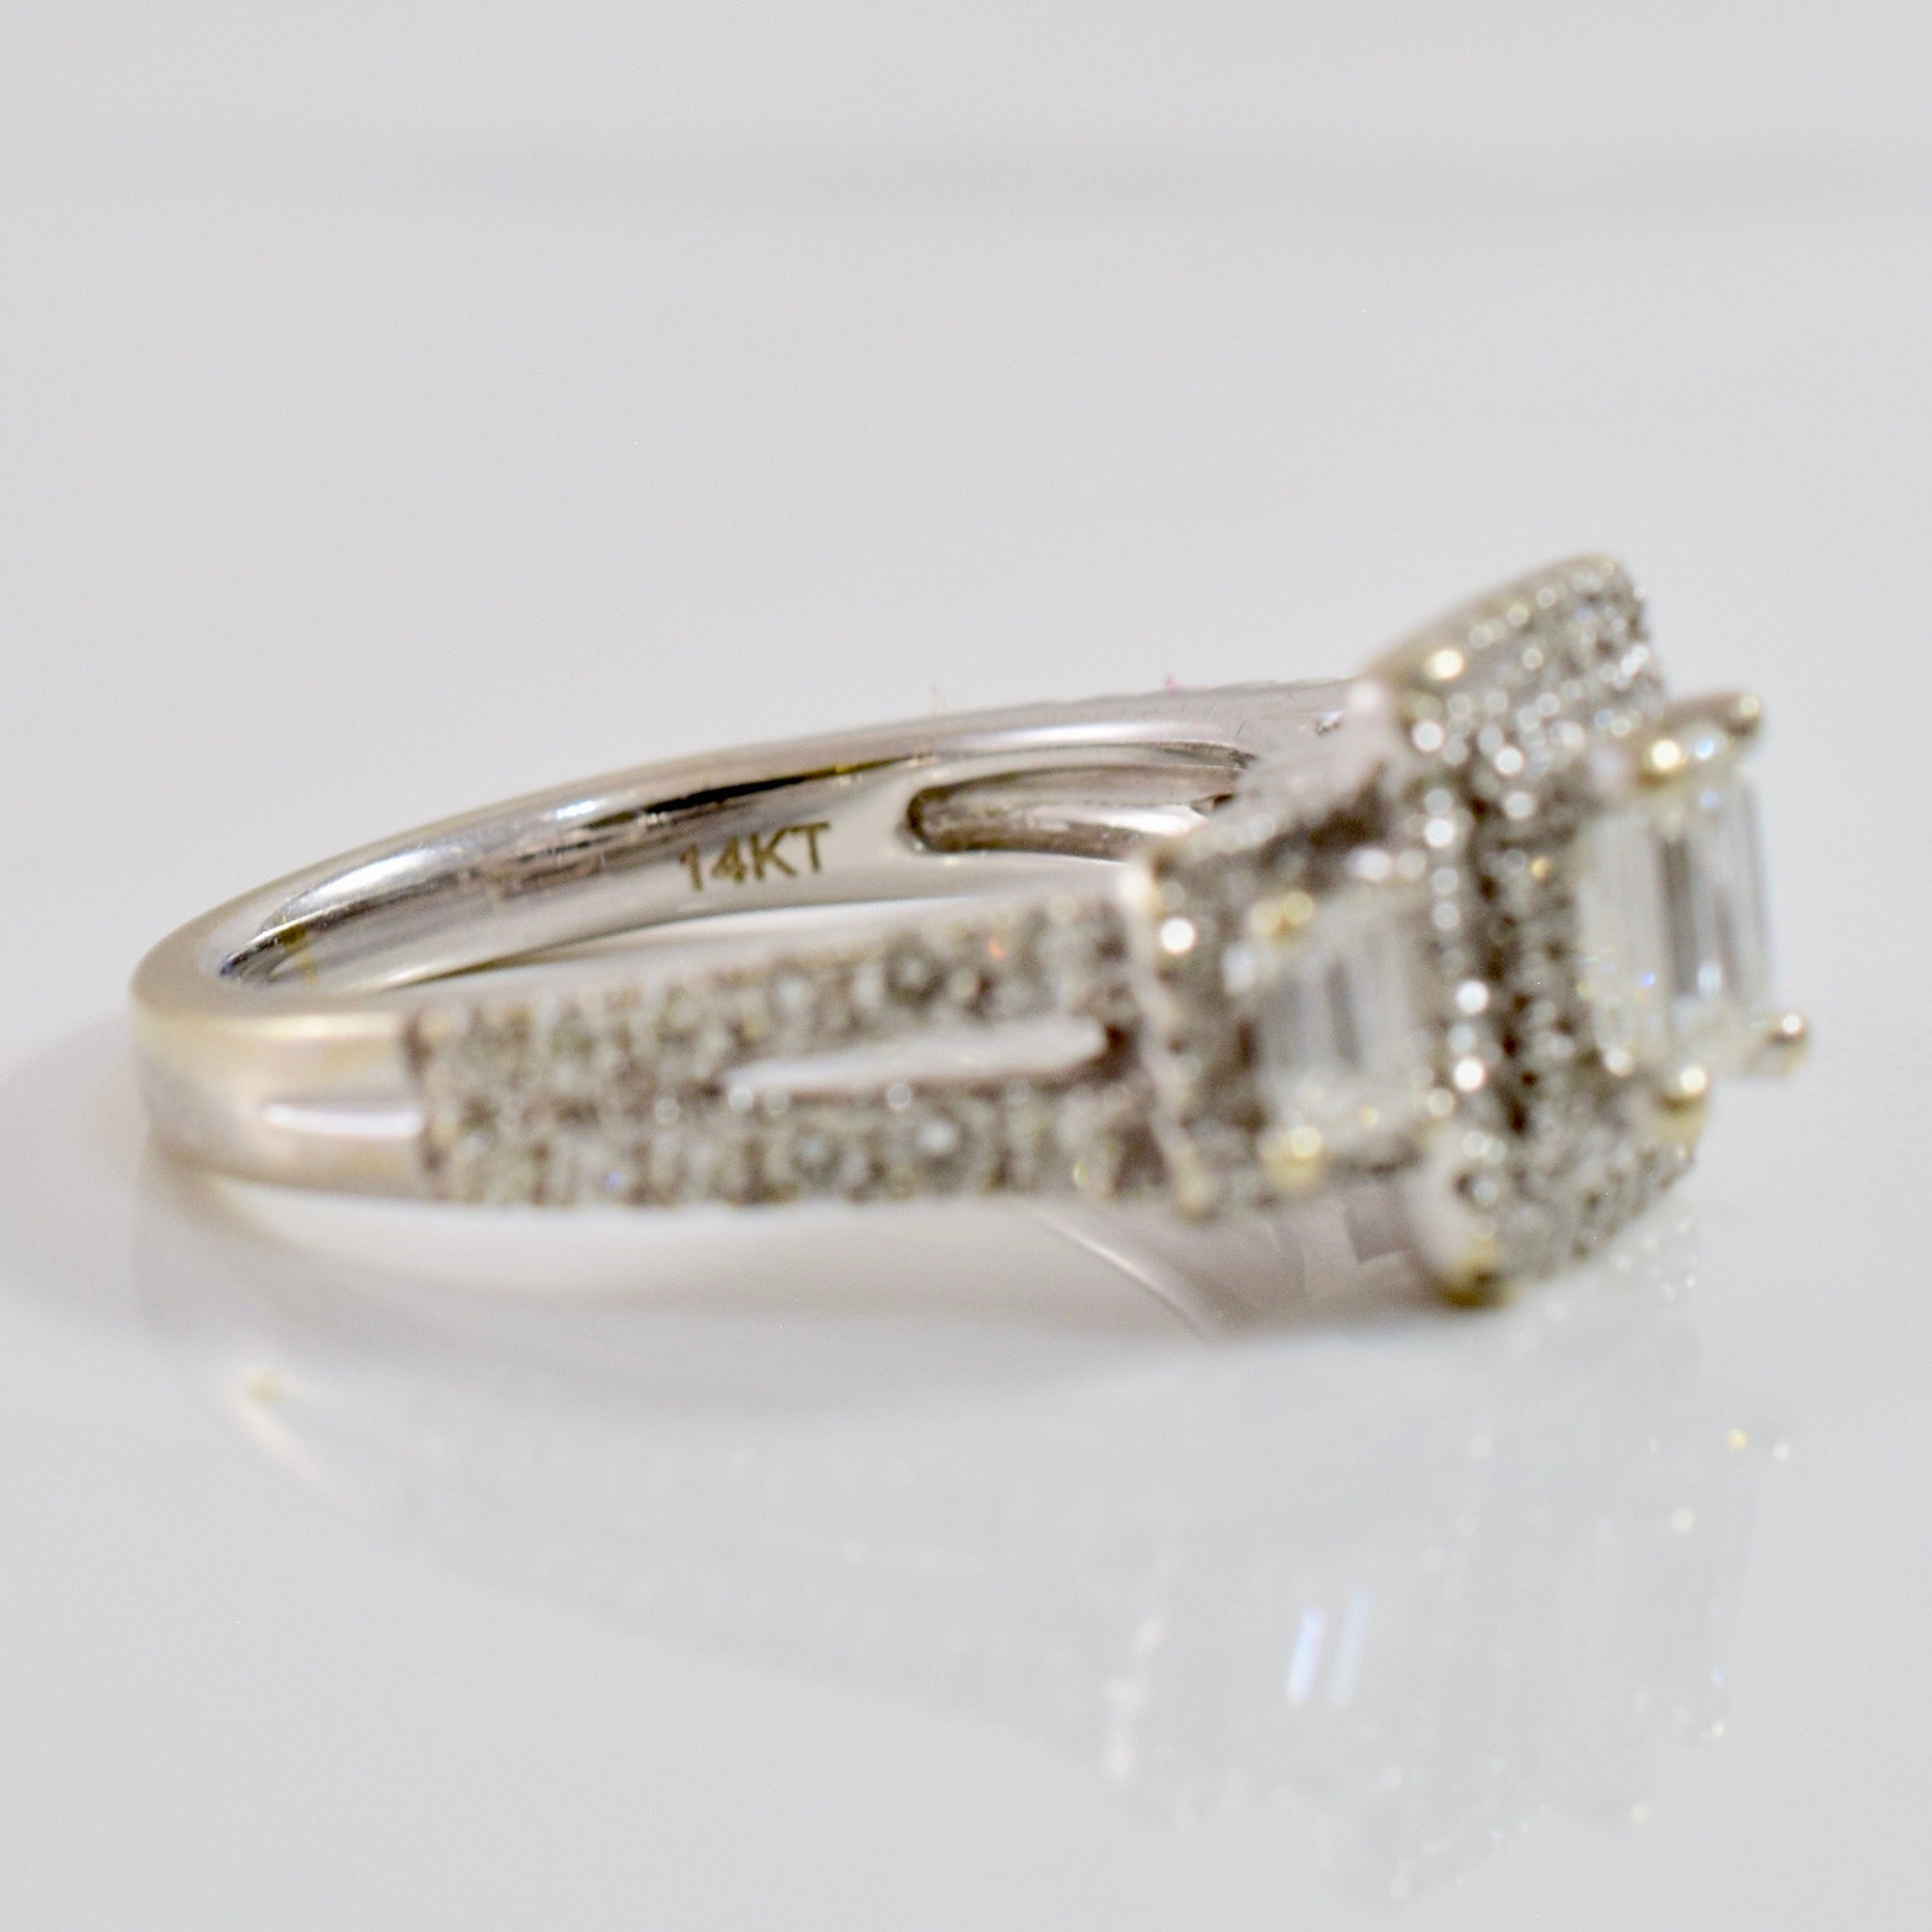 'Vera Wang' Love Collection Diamond Engagement Ring | 1.15 ctw SZ 5.5 |